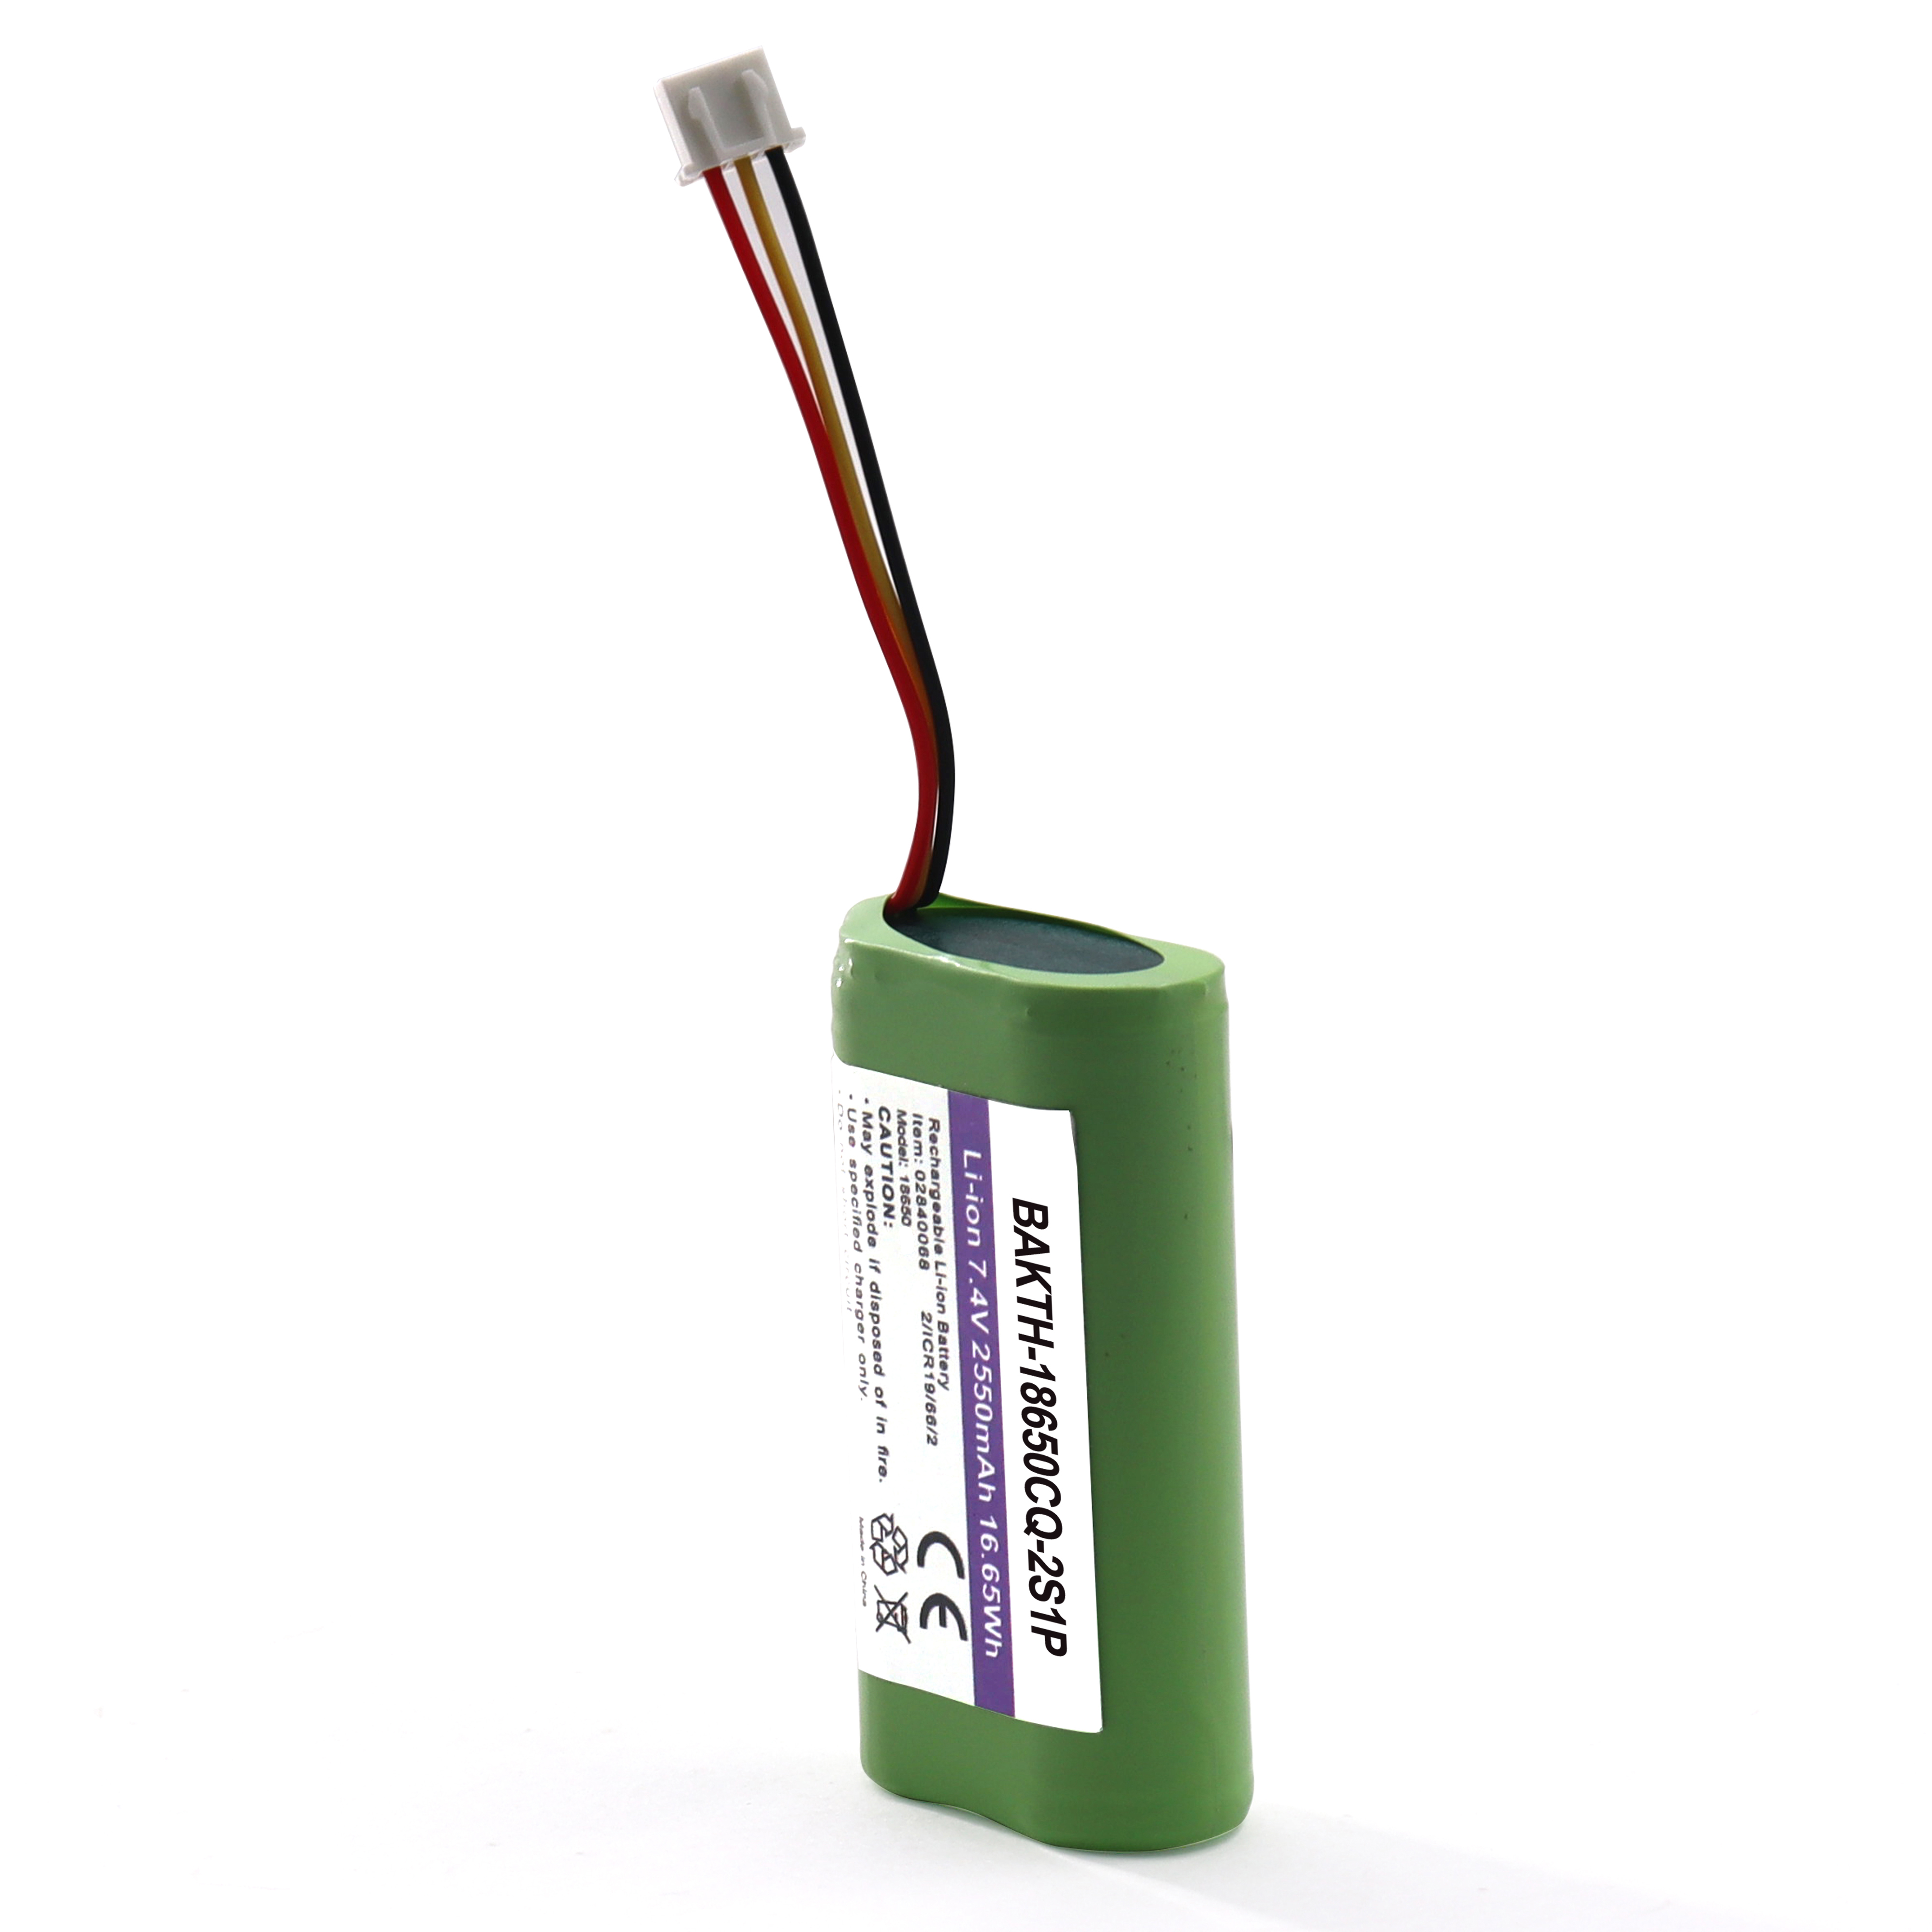 BAKTH-18650CQ-2S1P 7.4V 2550MAH Venta caliente Batería de iones de litio recargable Batería personalizada para dispositivos de aplicación eléctrica